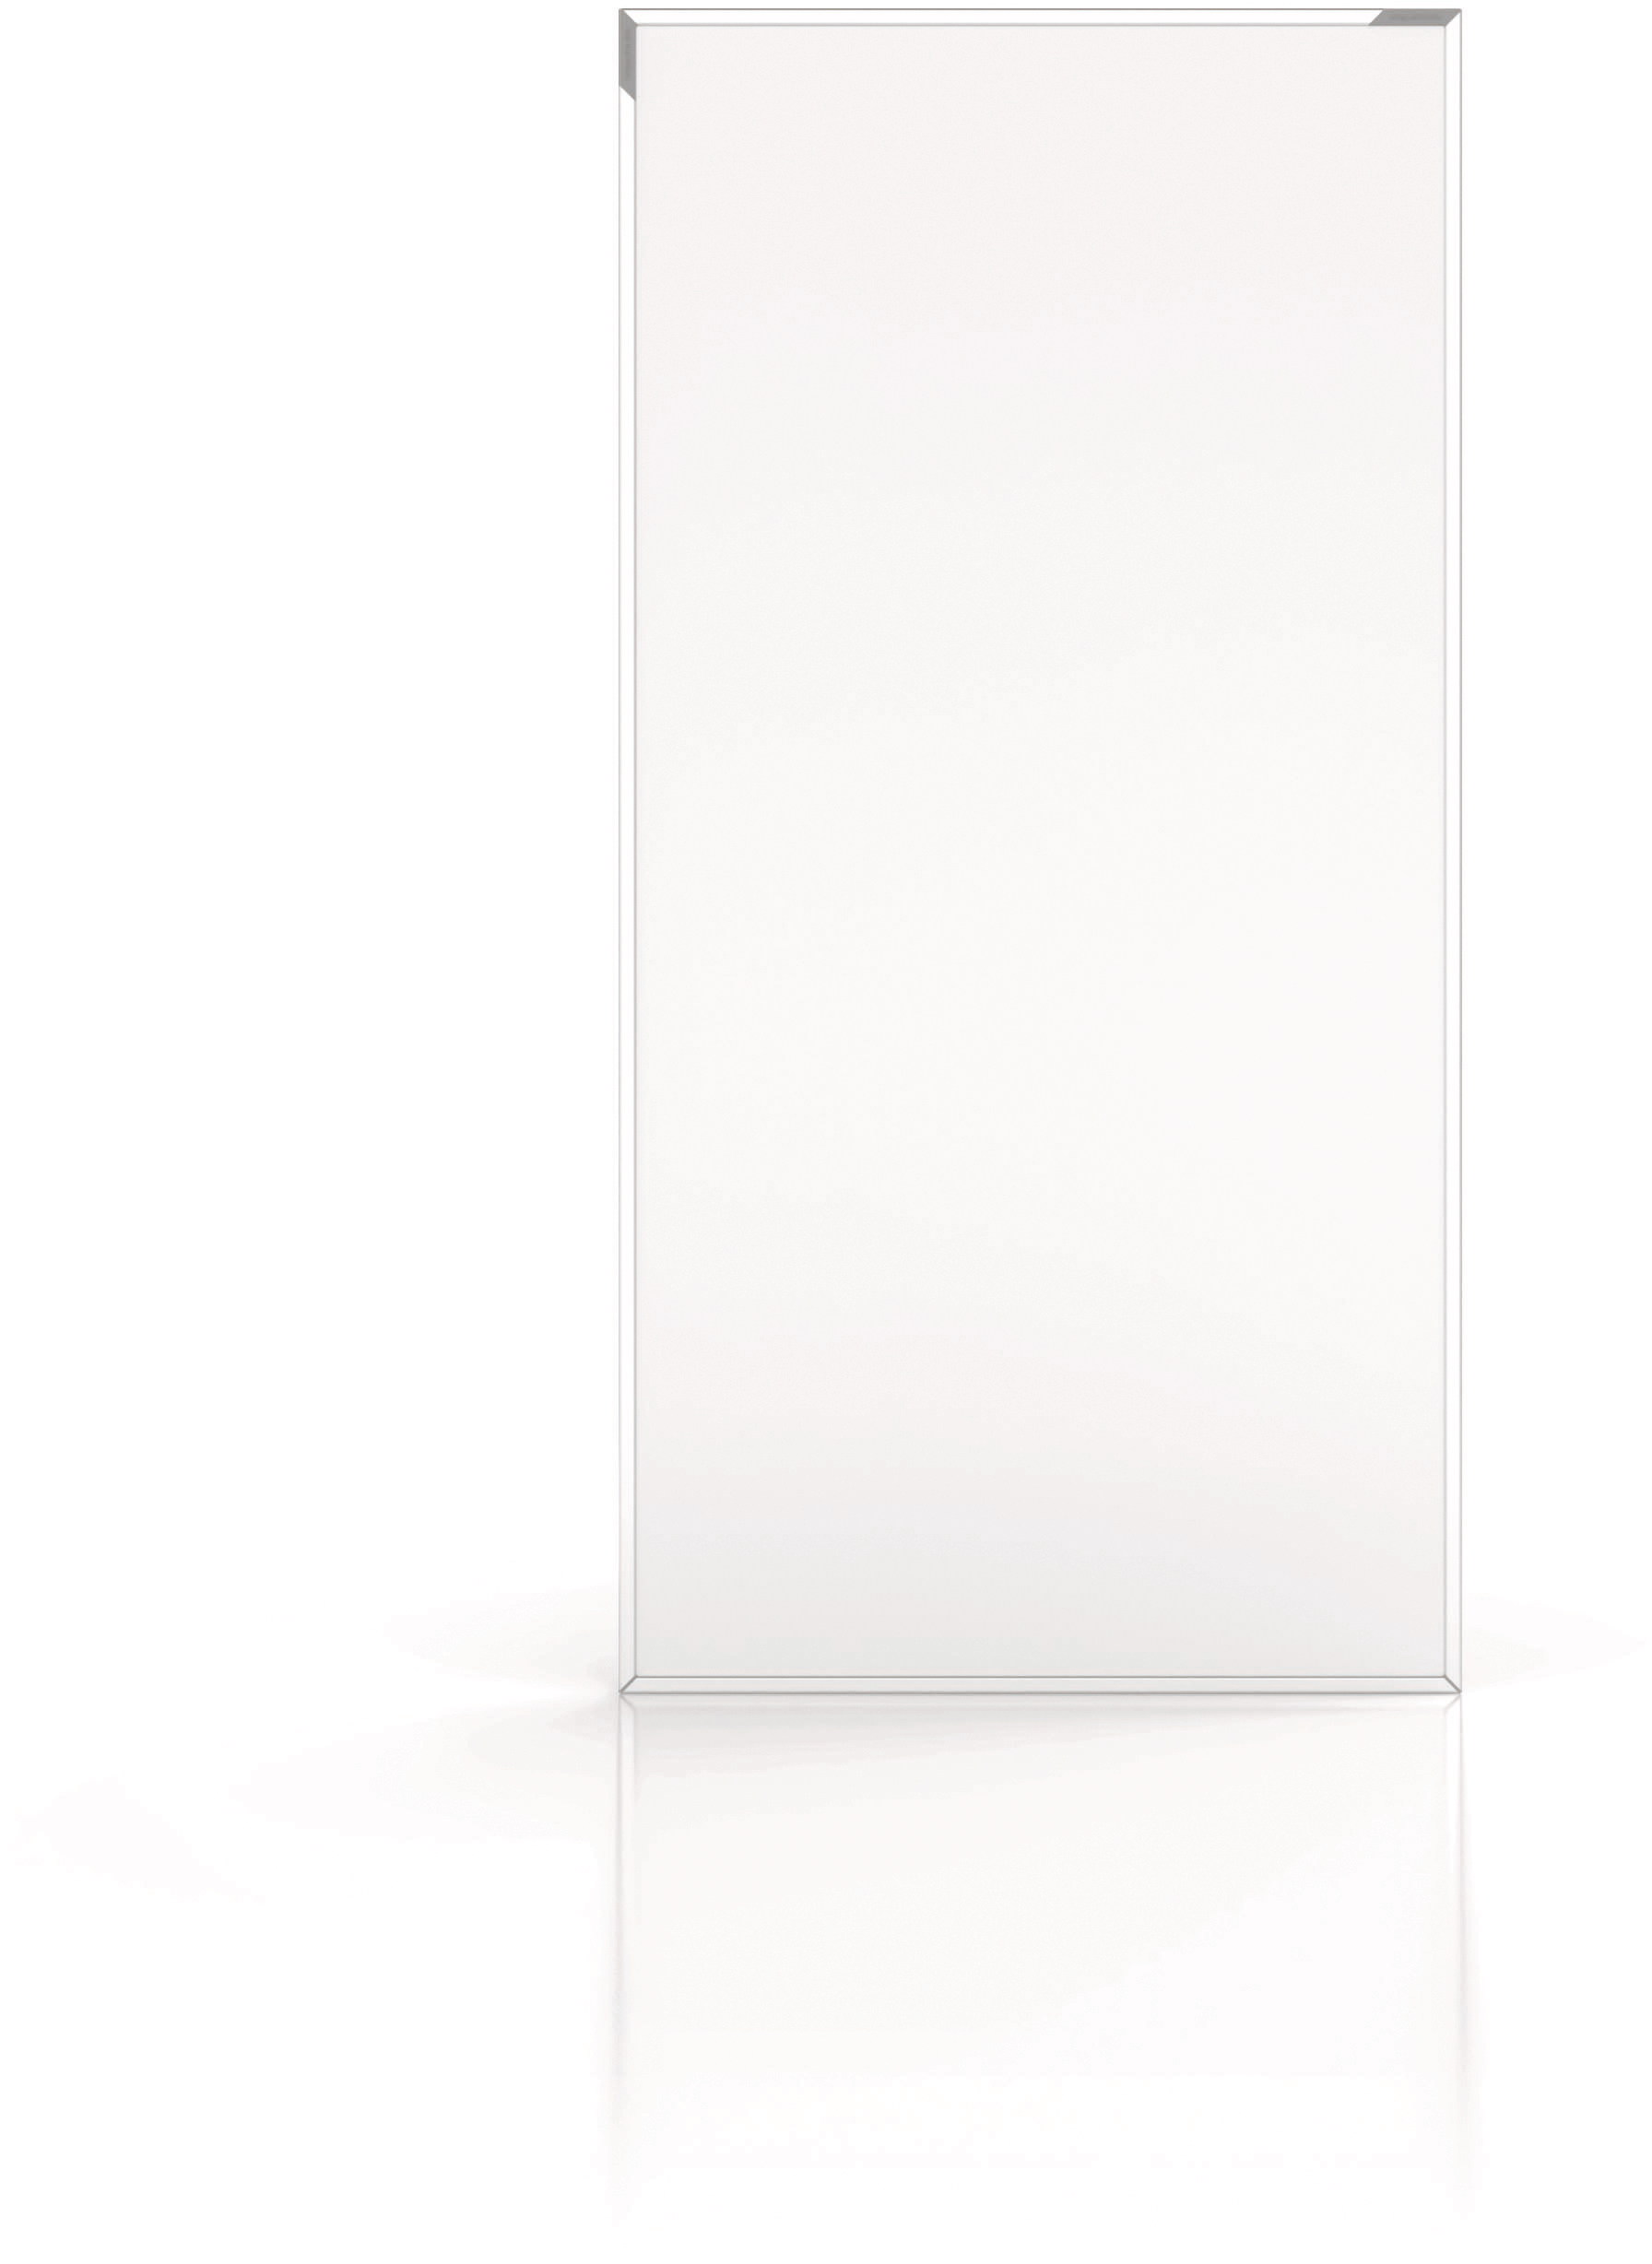 MAGNETOPLAN Design-Thinking Whiteboard 1241292 double émailler 178x90cm double émailler 178x90cm